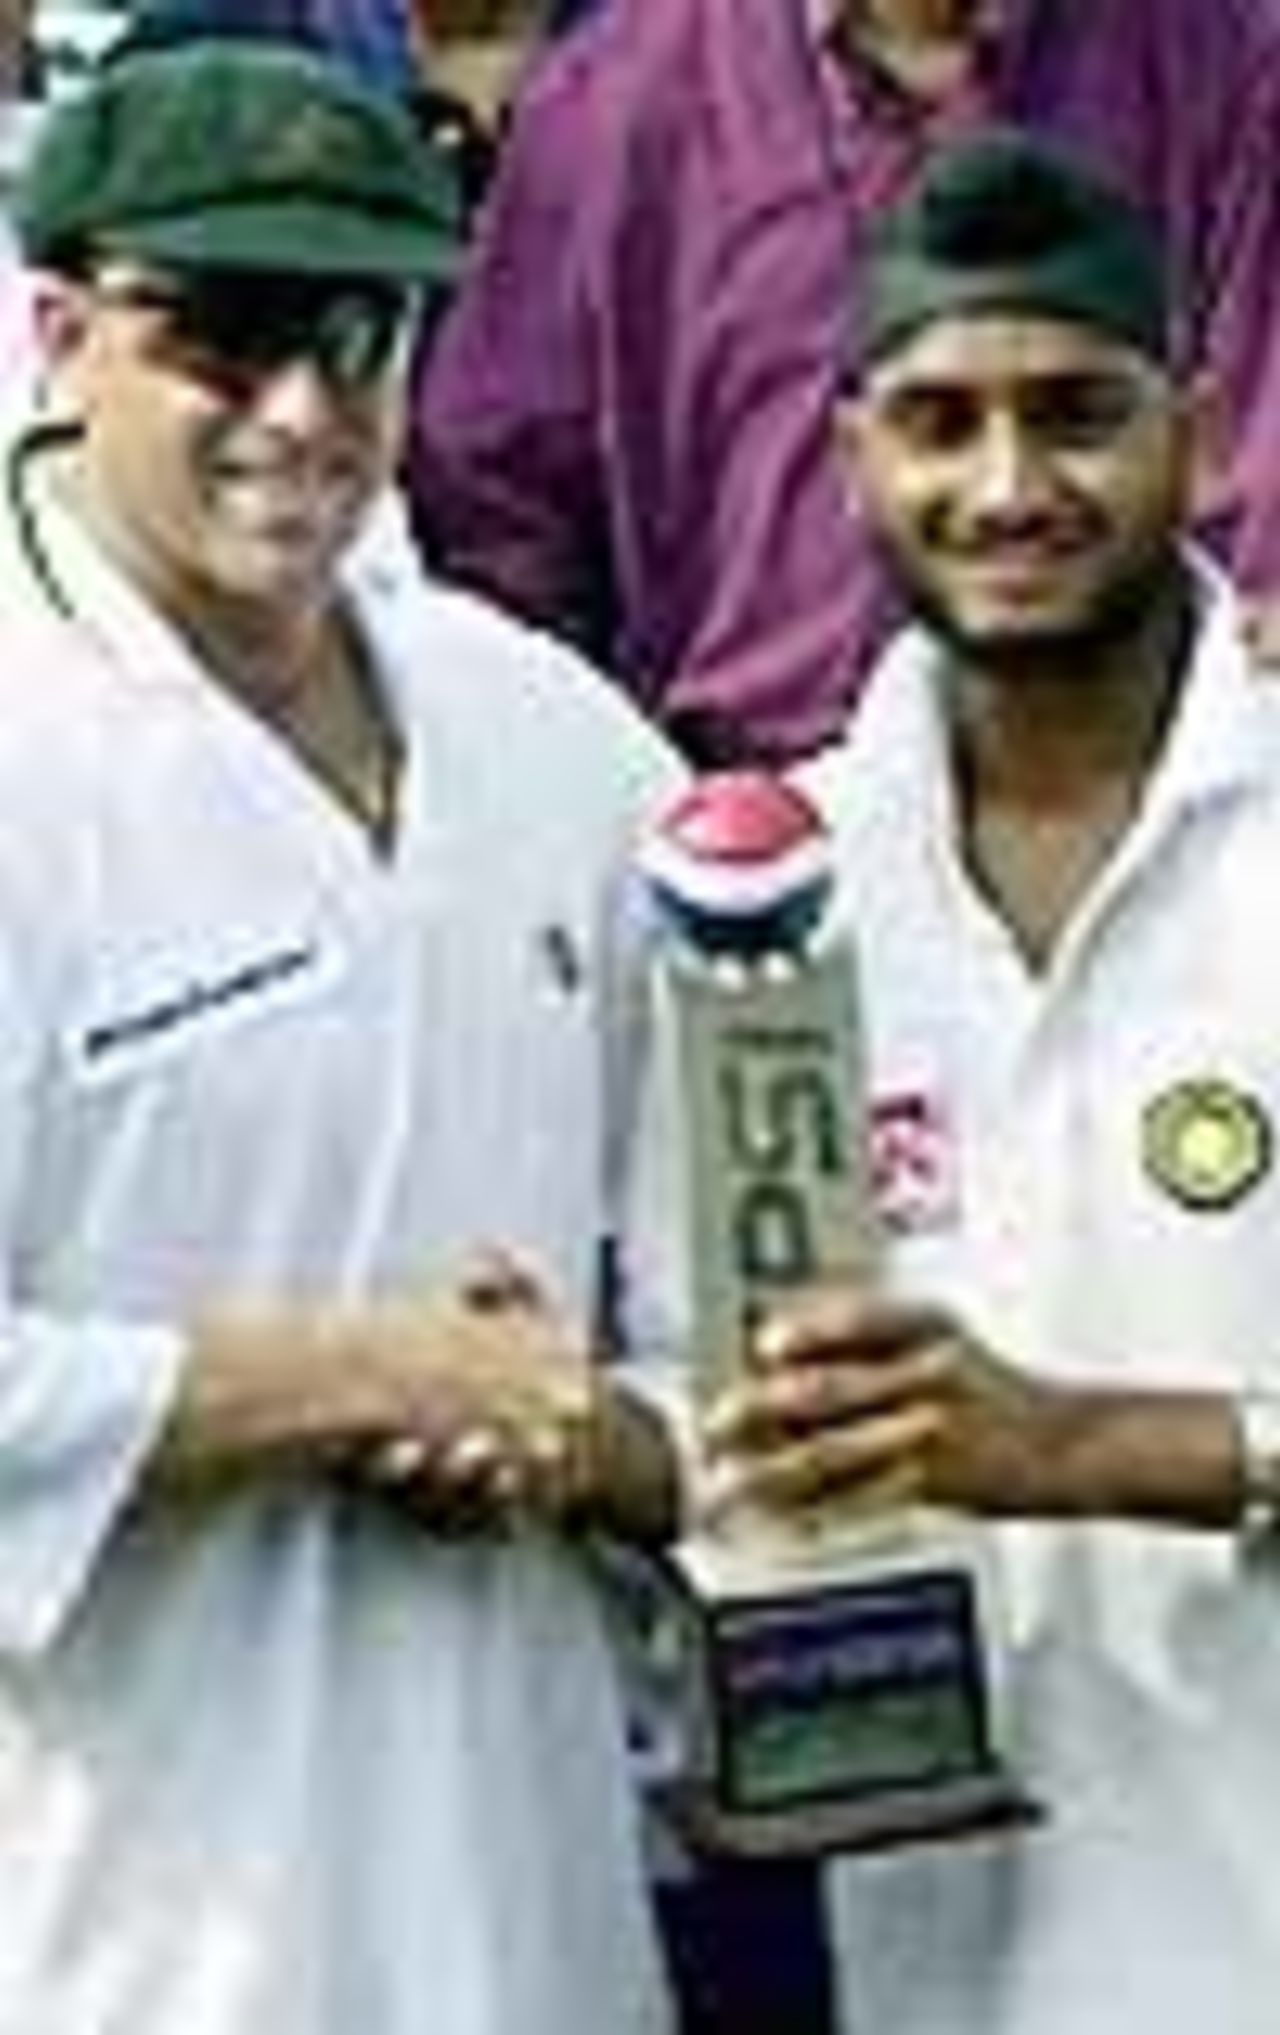 India v Australia , 3rd Test Match at Chennai, 21 March 2001